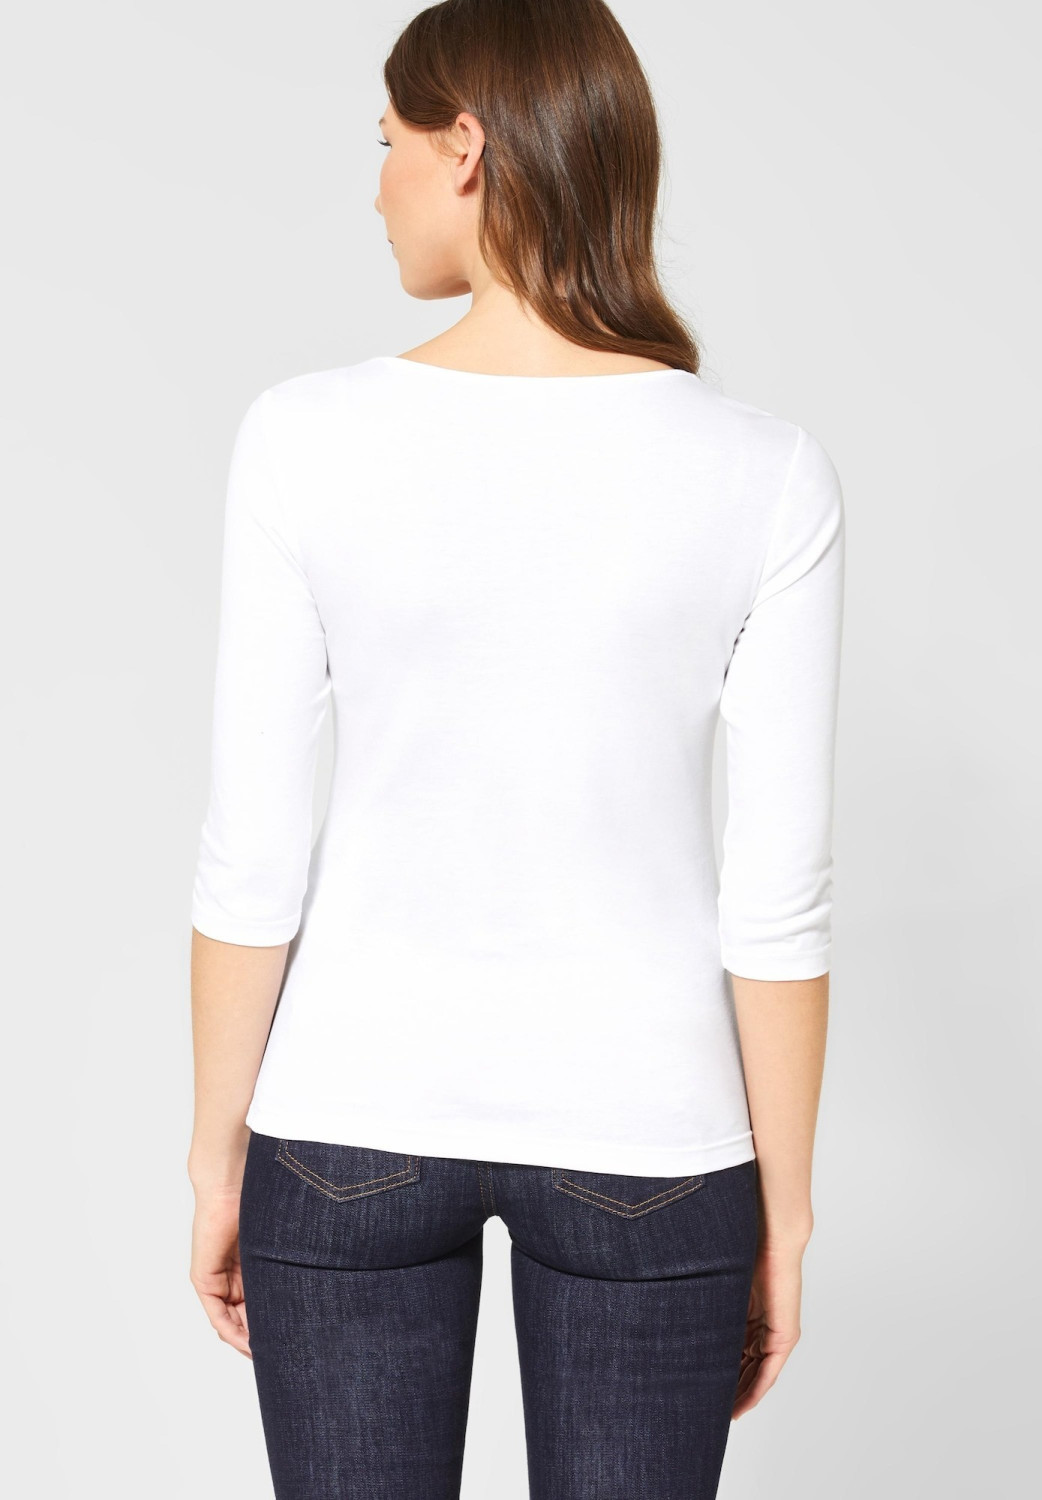 Street One Basic Shirt white (A313977) € Preisvergleich | 17,96 bei Pania ab